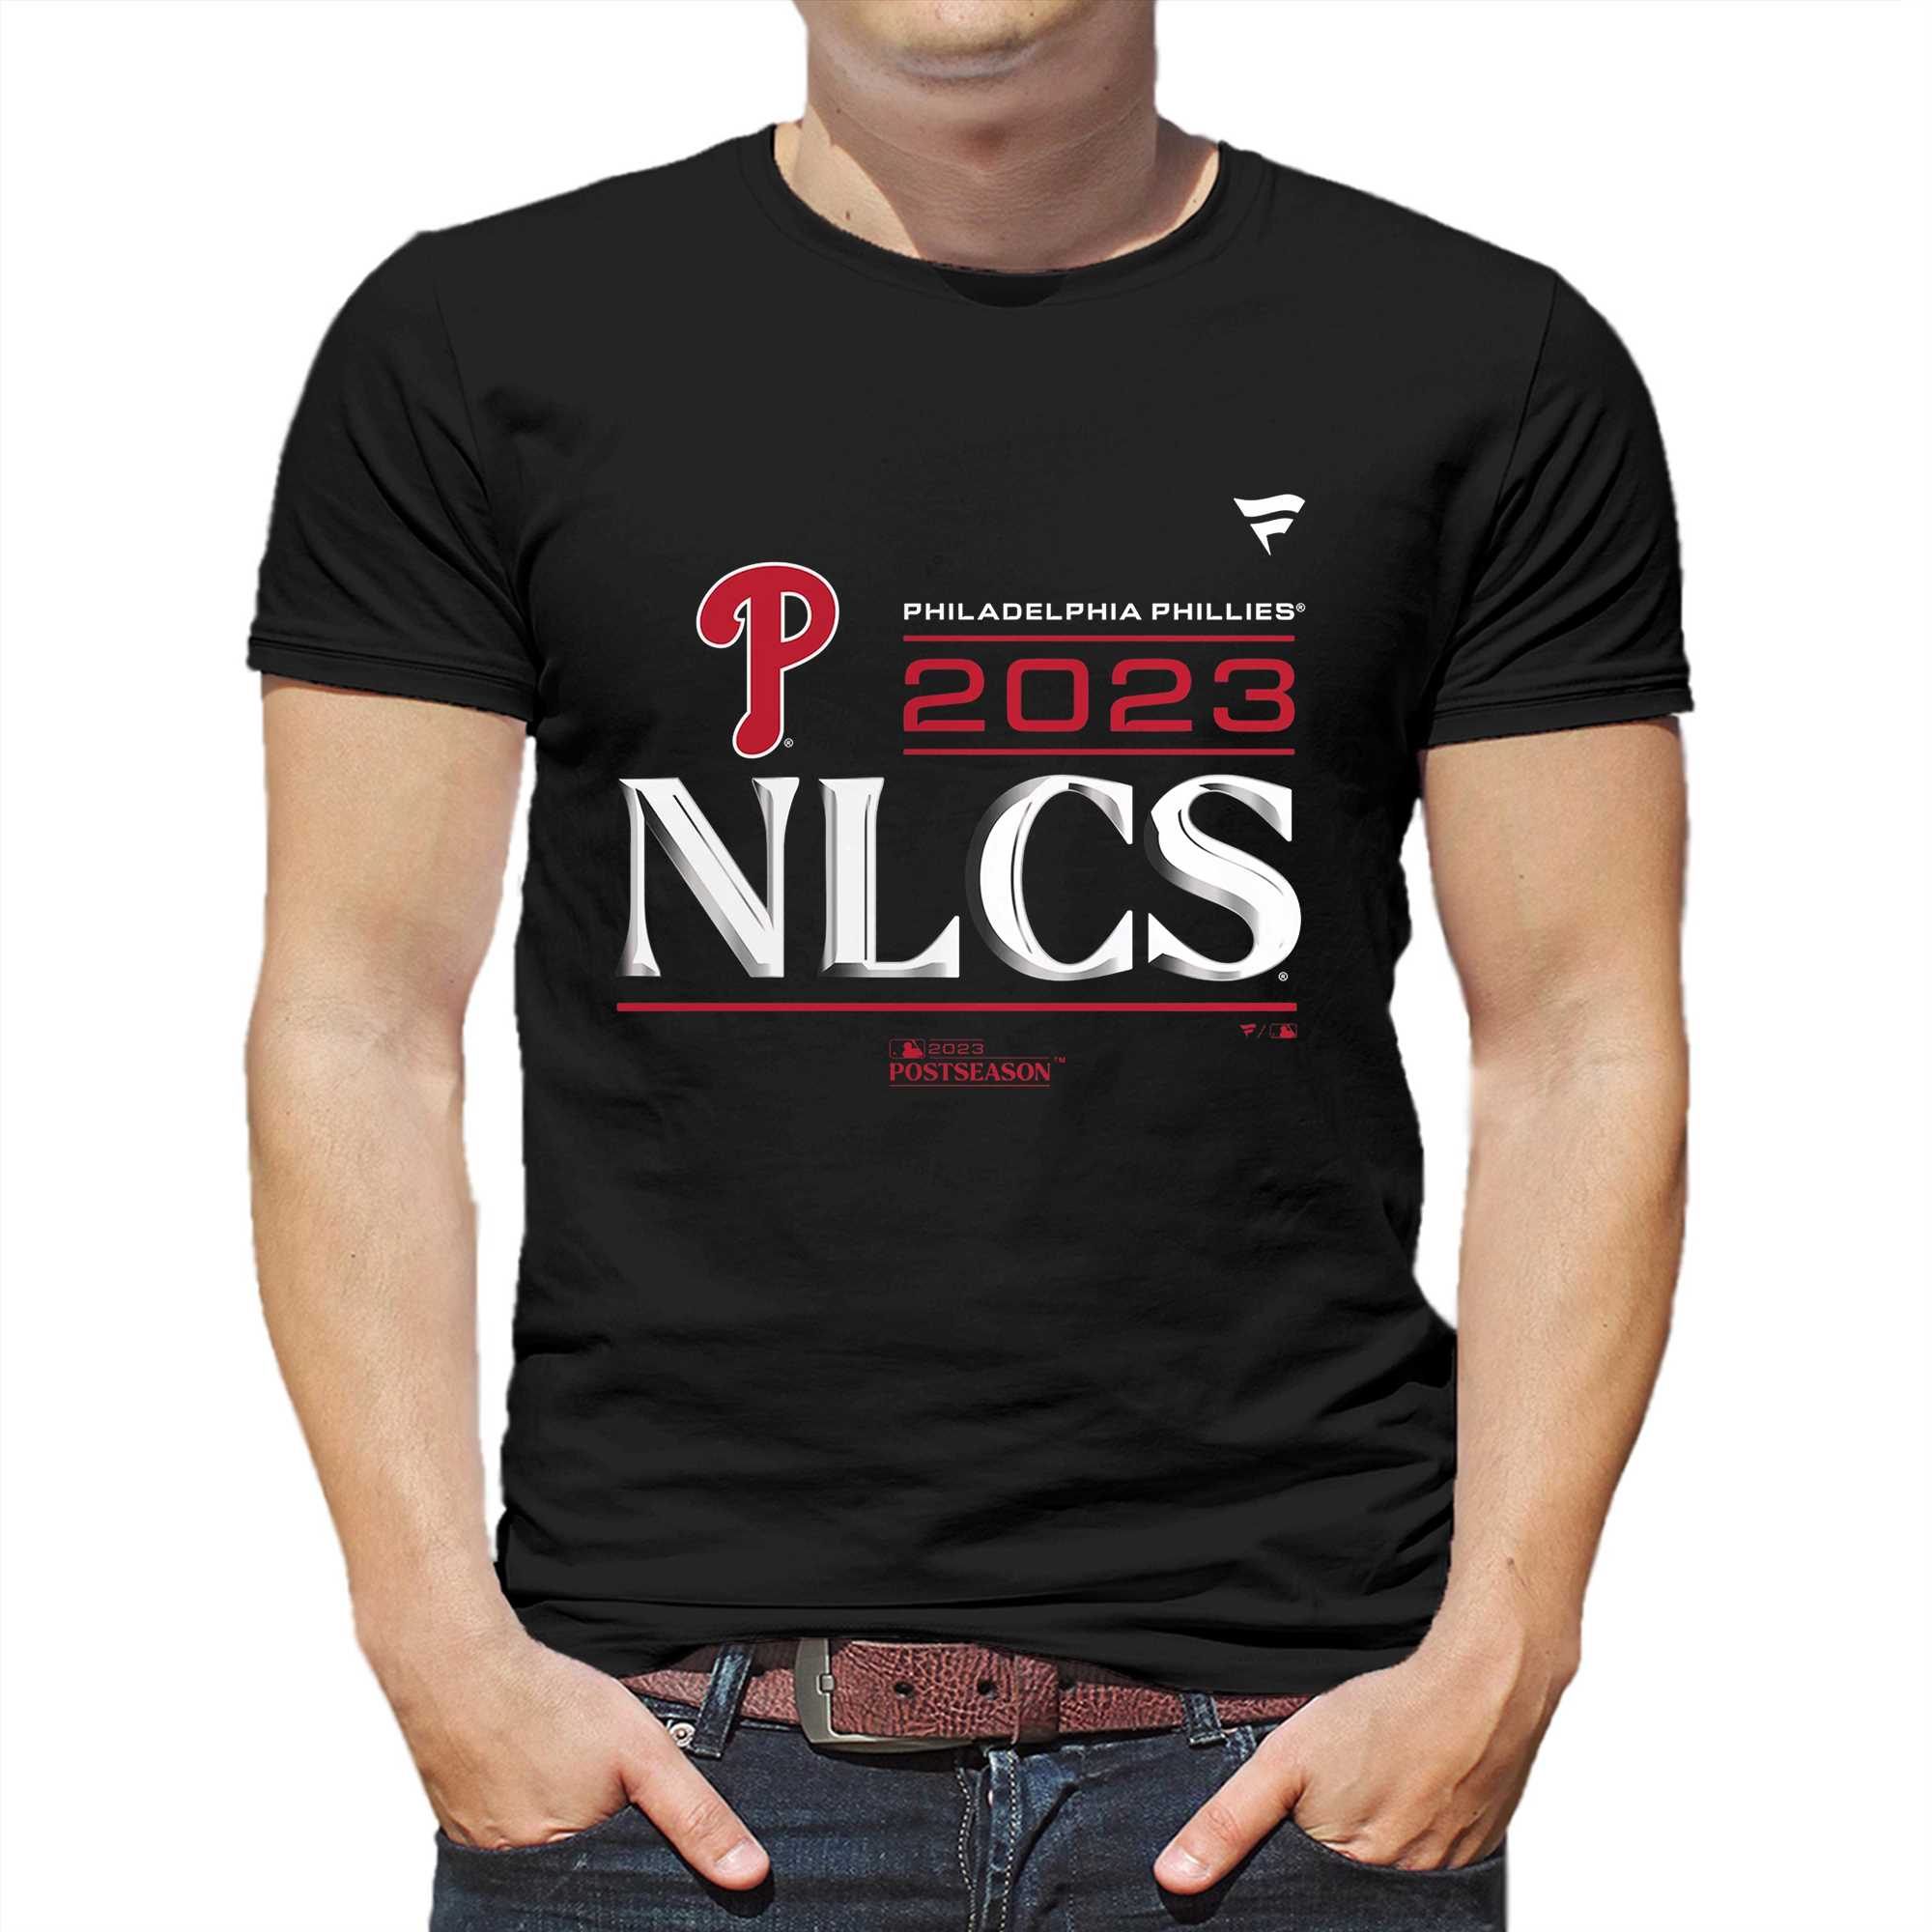 Philadelphia Phillies Plus Sizes T-Shirt, Phillies Shirts